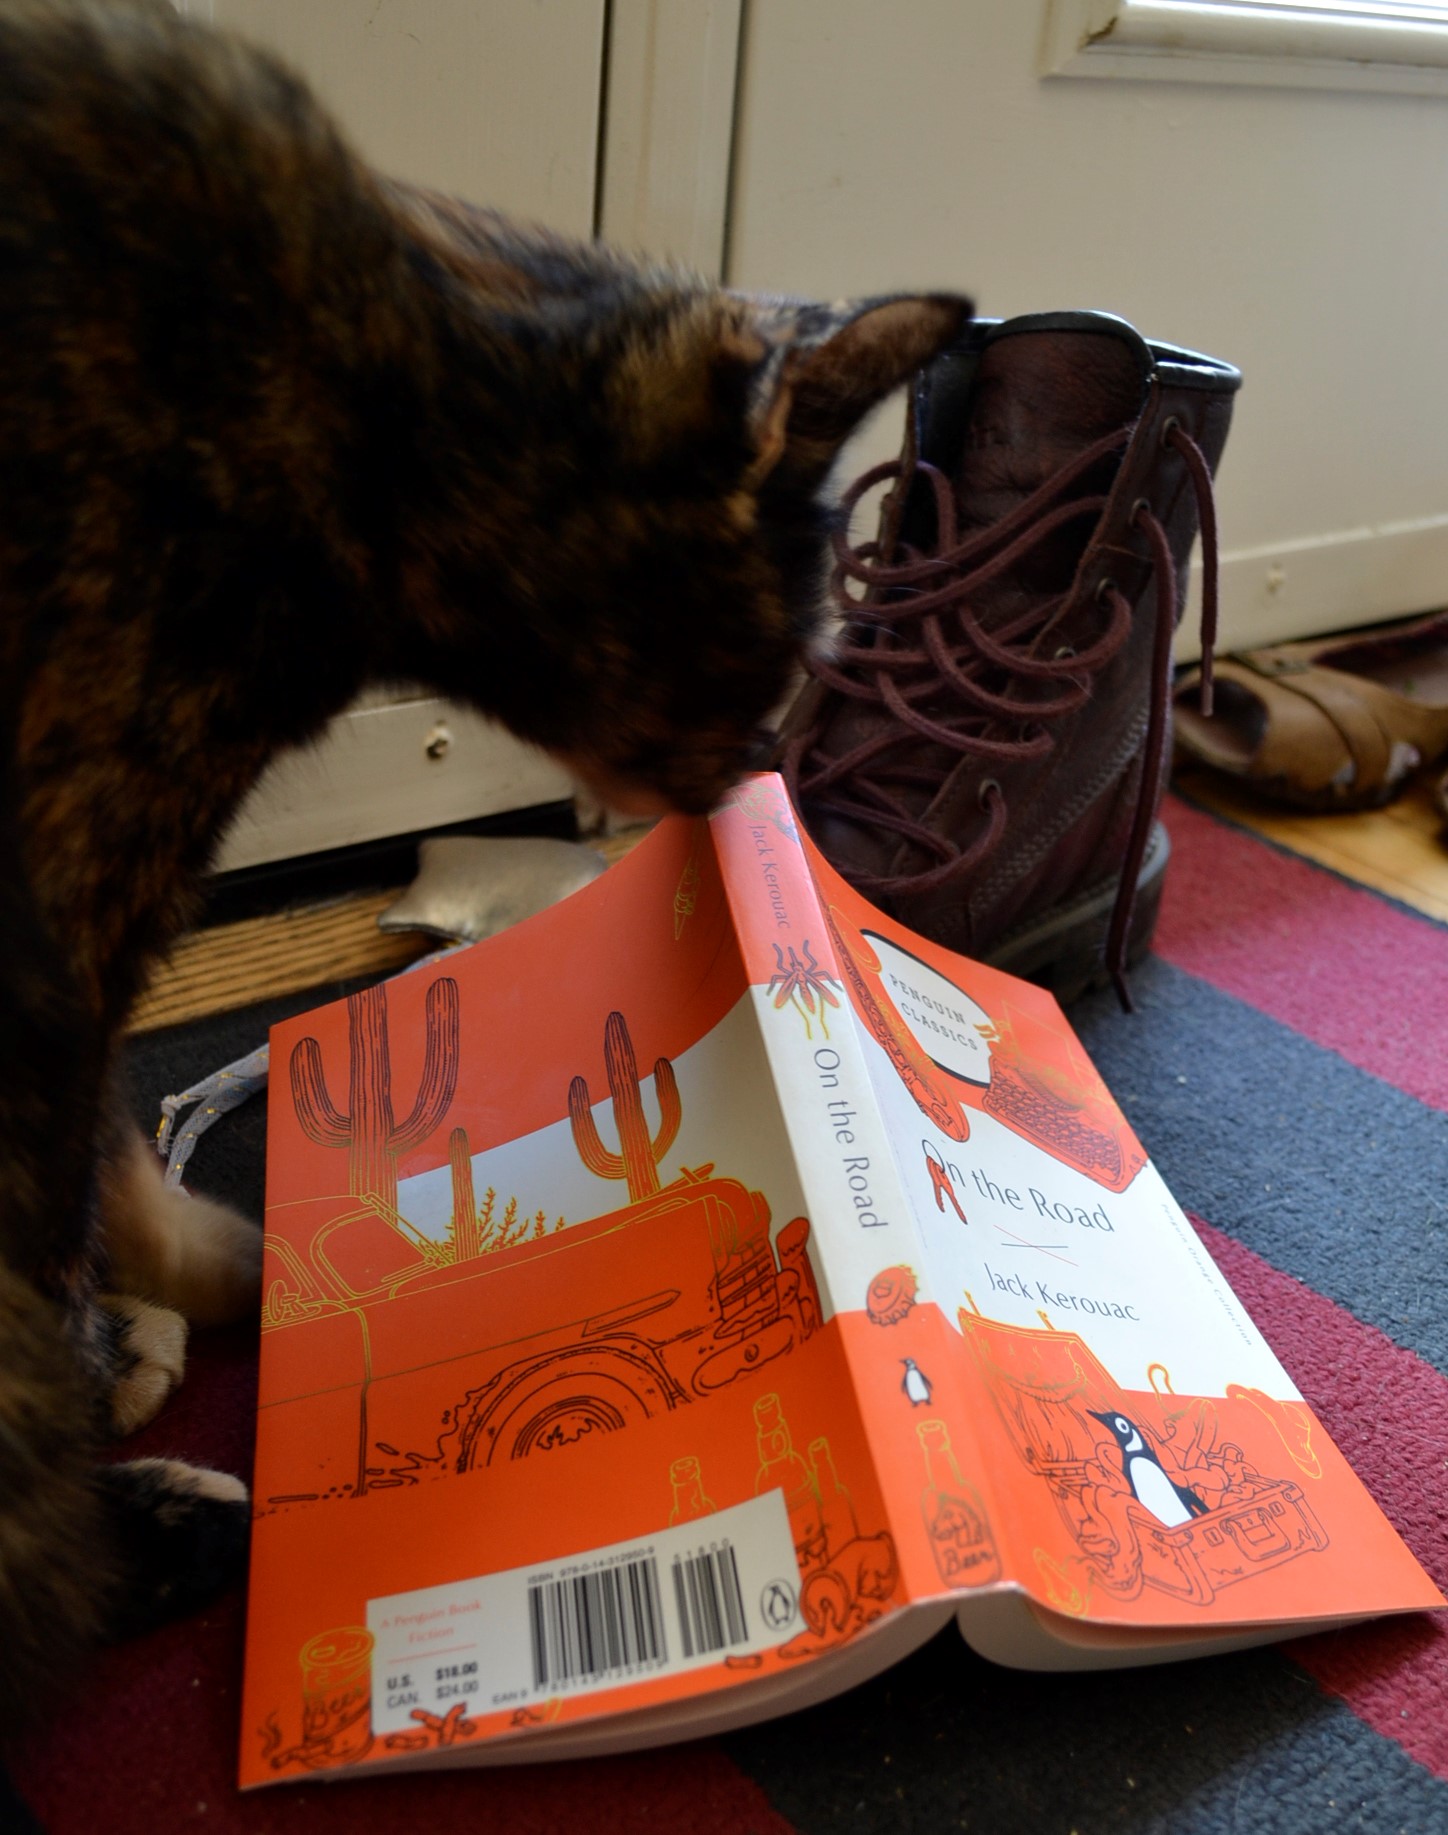 A tortoiseshell kitten sniffs an orange copy of On the Road beside a boot.